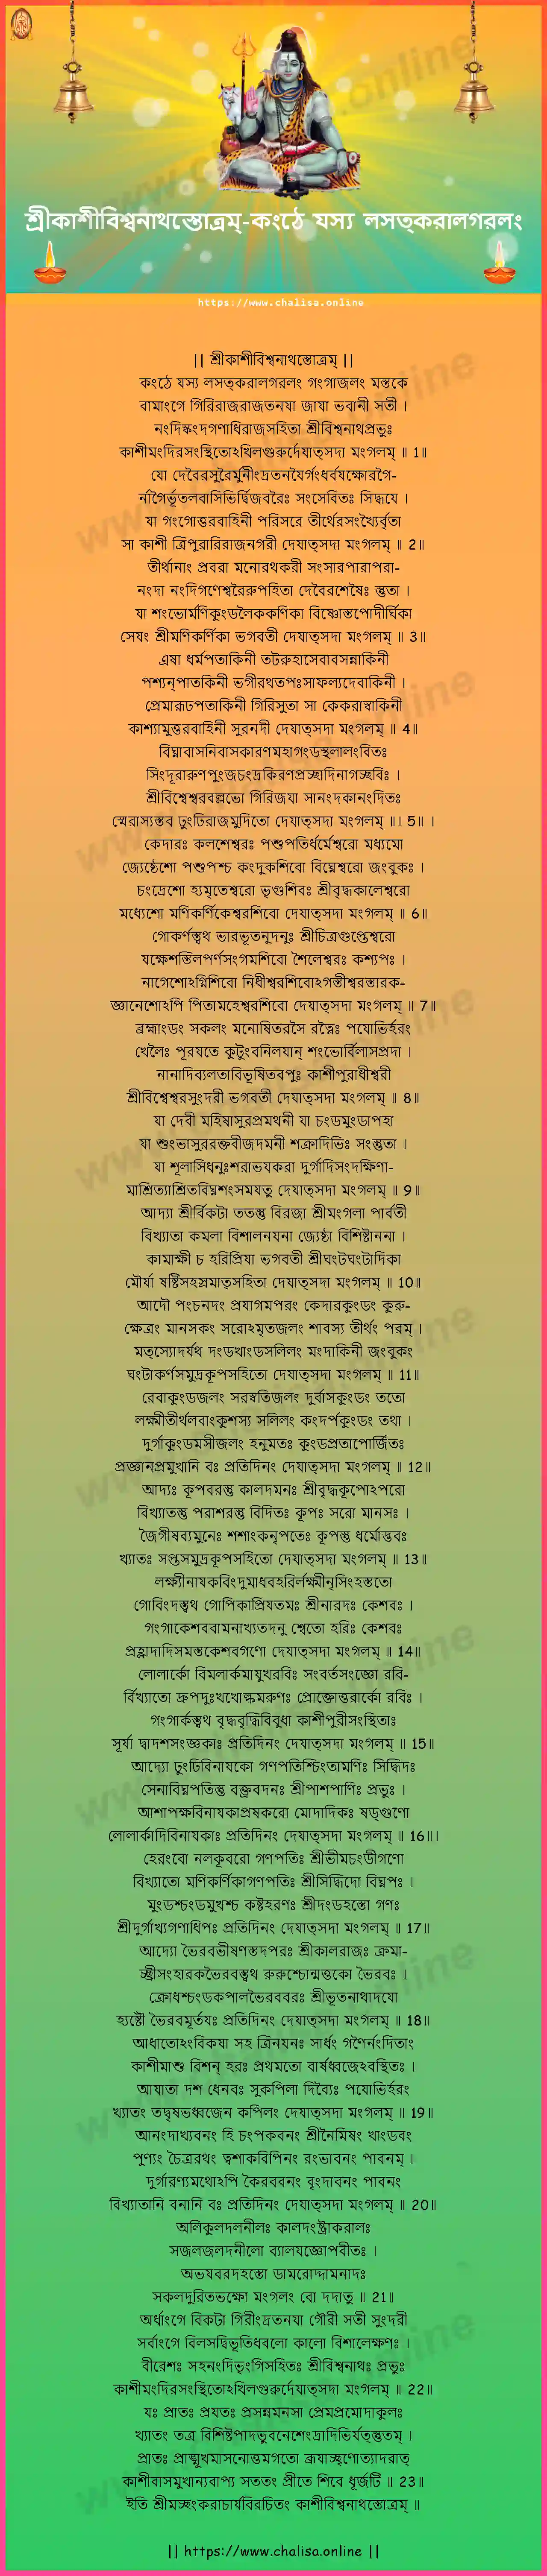 kanthe-yasya-lasatkaralagaralam-sri-kashi-visvanatha-stotram-bengali-bengali-lyrics-download